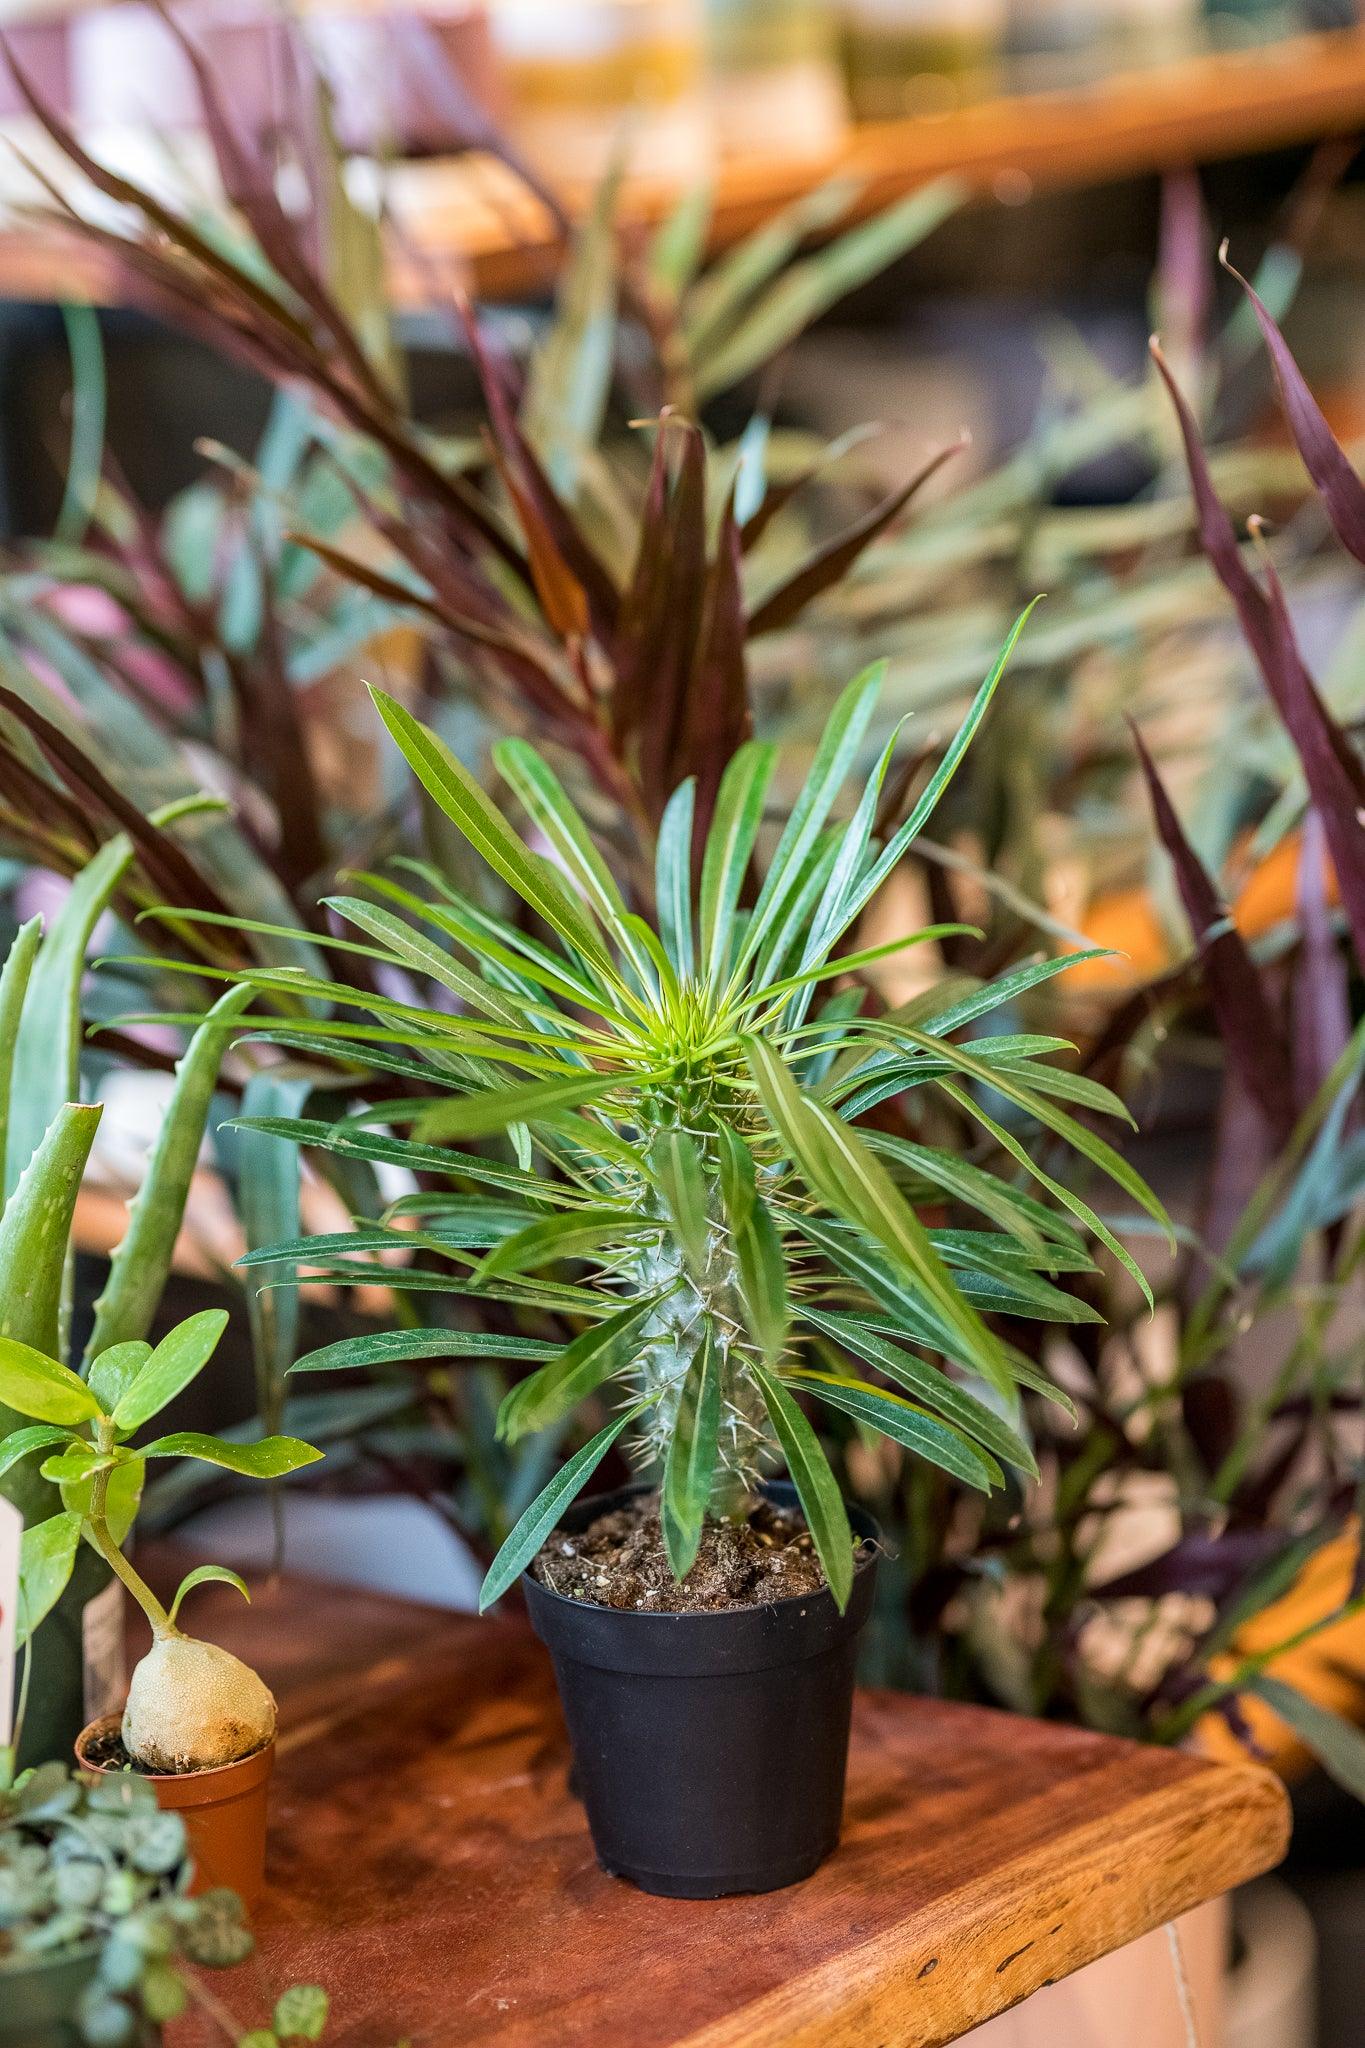 Pachypodium Lamerei 'Madagascar' Palm